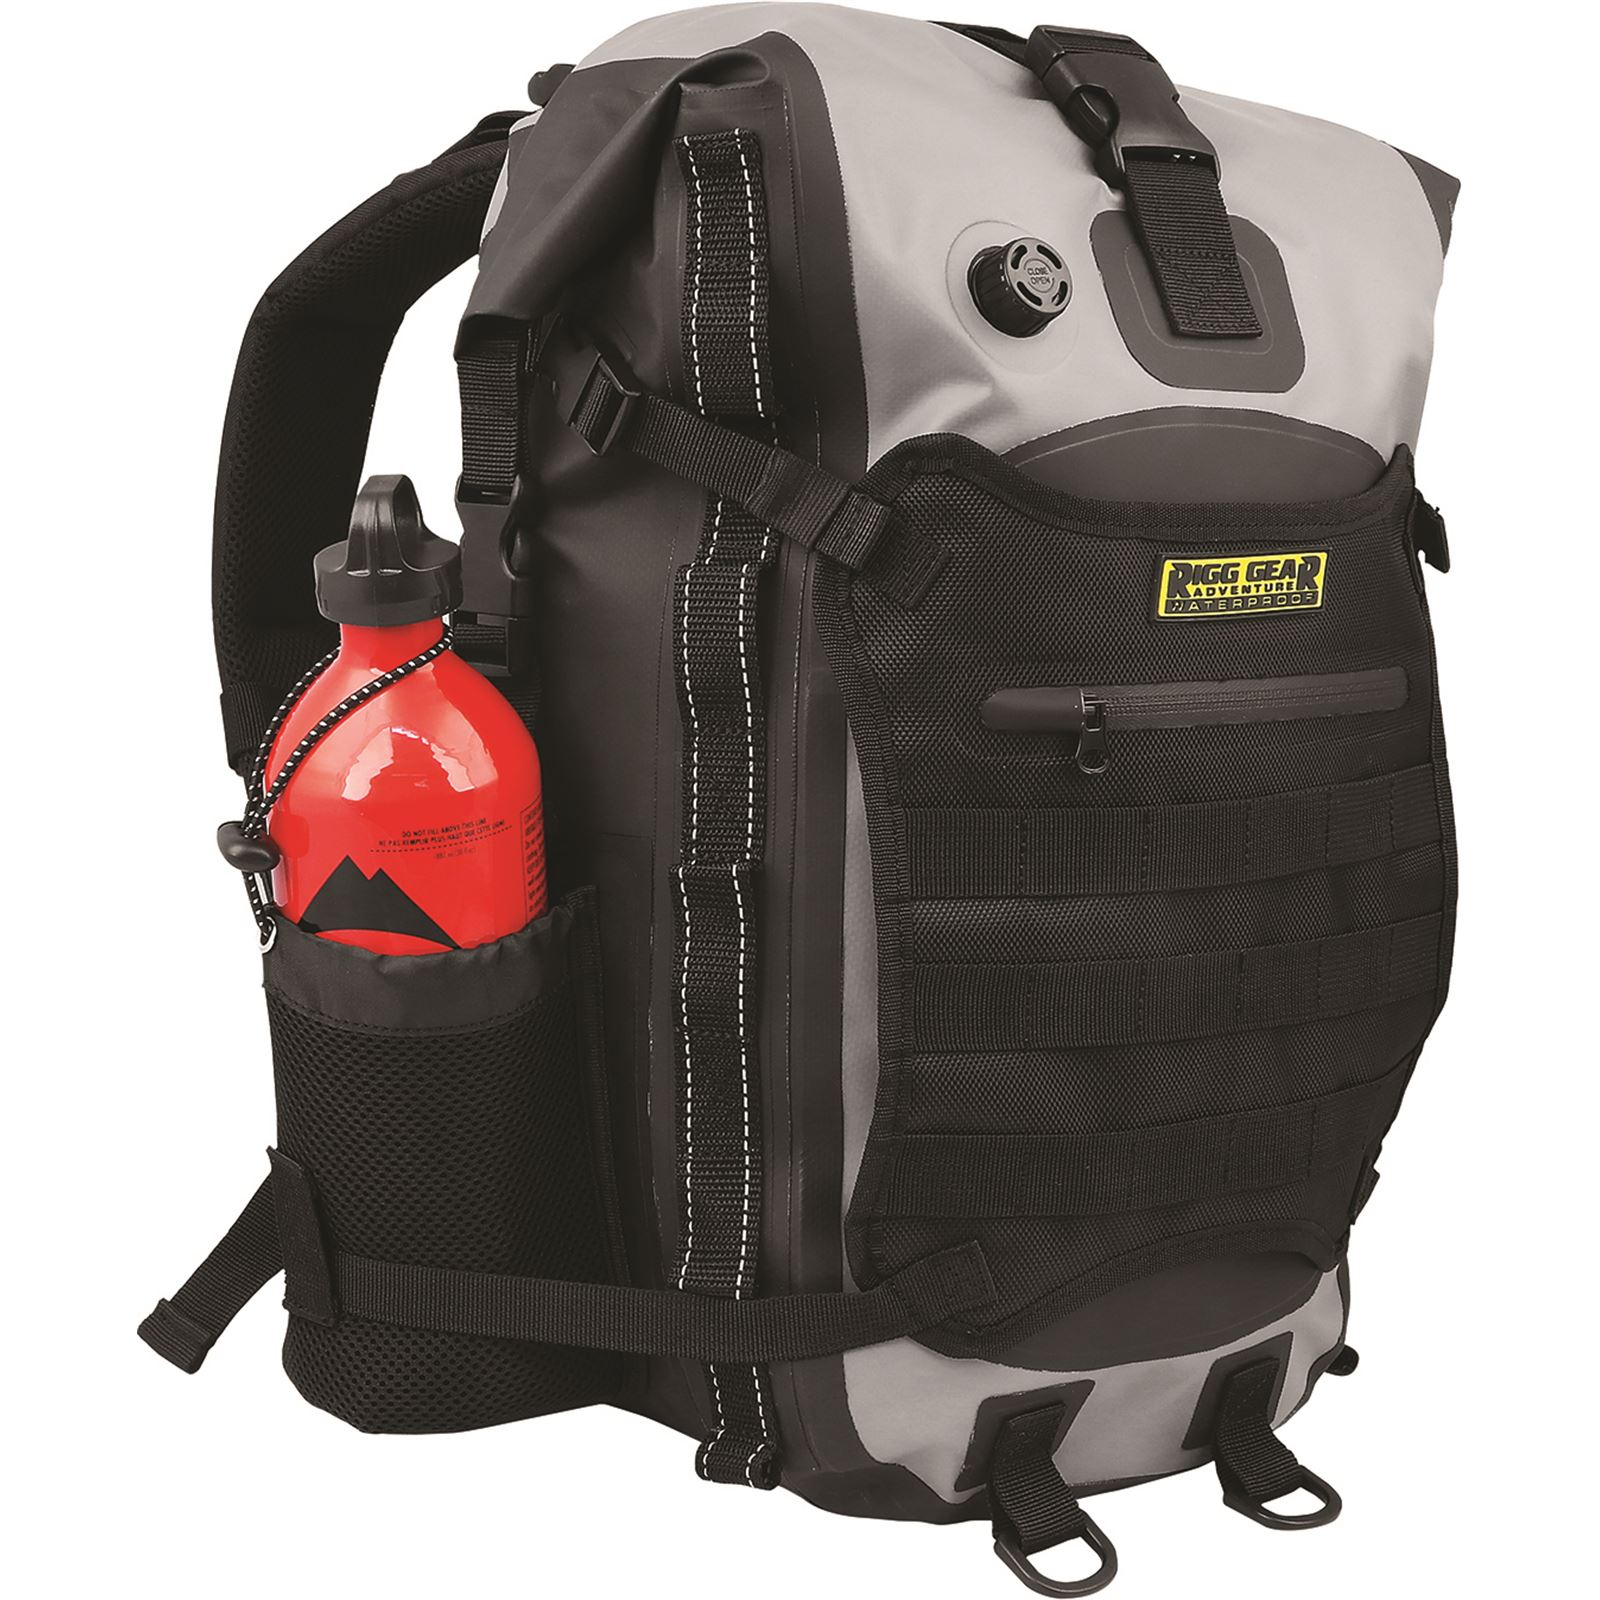 Nelson-Rigg Hurricane Waterproof Backpack / Tailpack